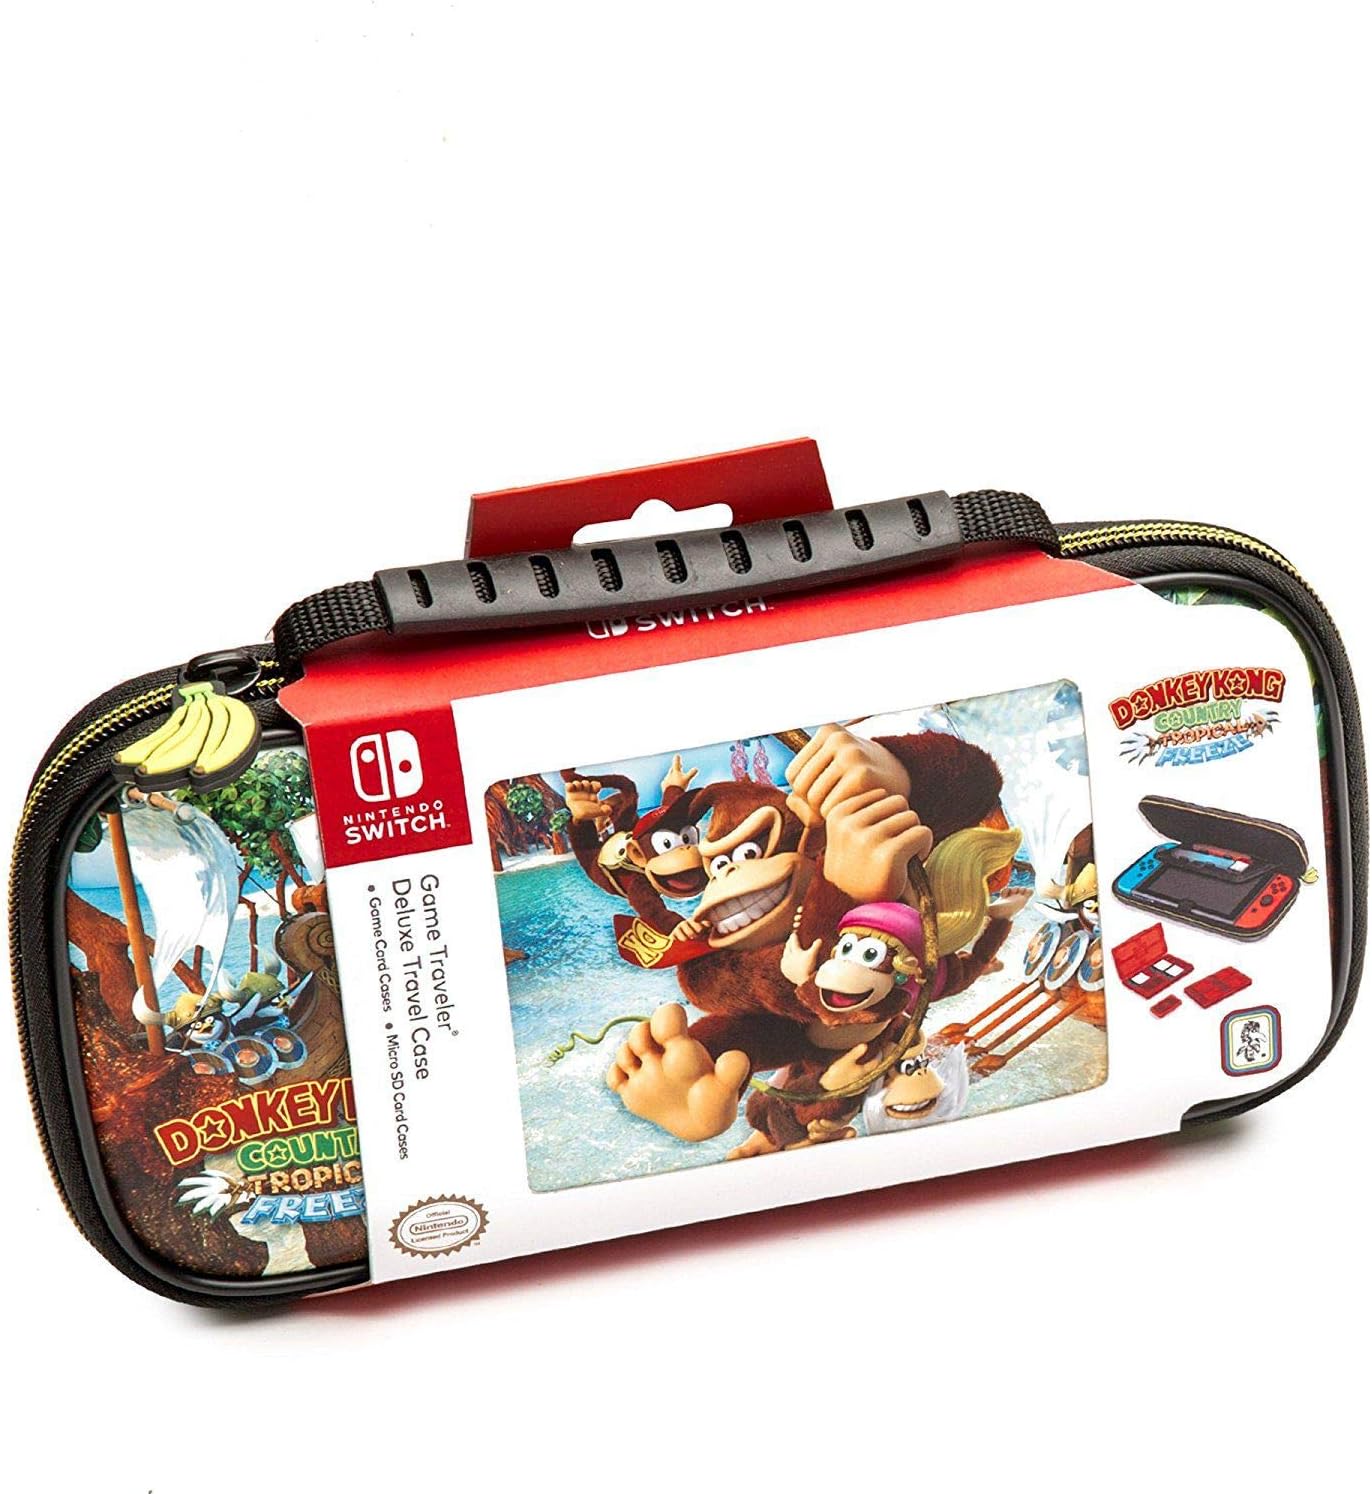 Nintendo Switch Donkey Kong Funda de transporte – Funda protectora de viaje de lujo – Exterior de piel sintética